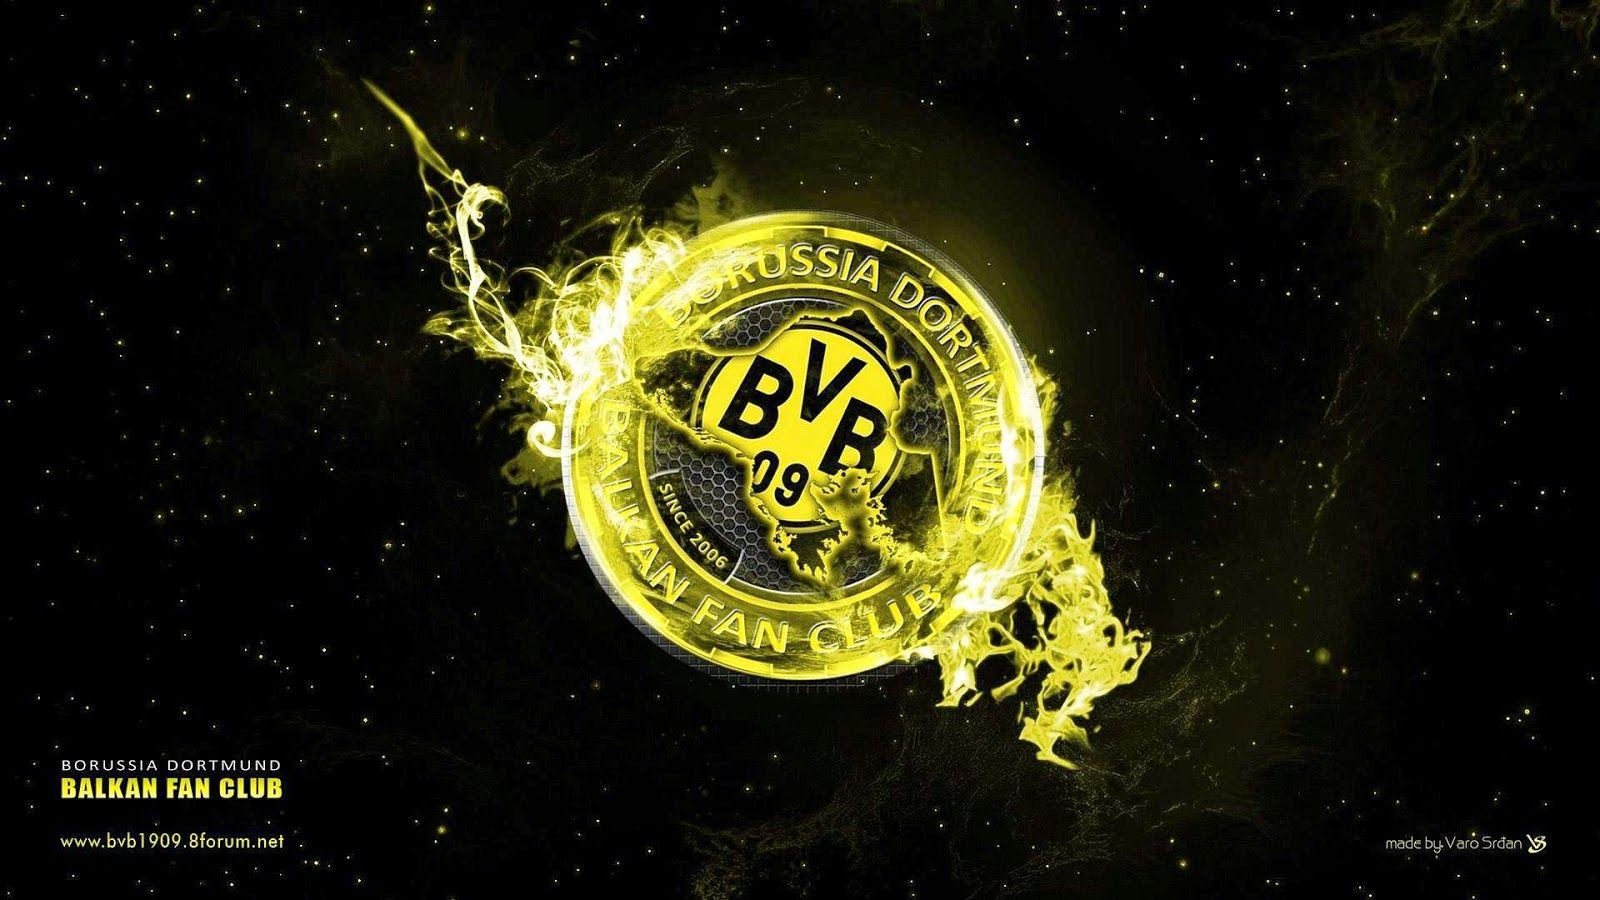 Romeo Goy's Borussia Dortmund 1600x900 Wallpaper and Clipart